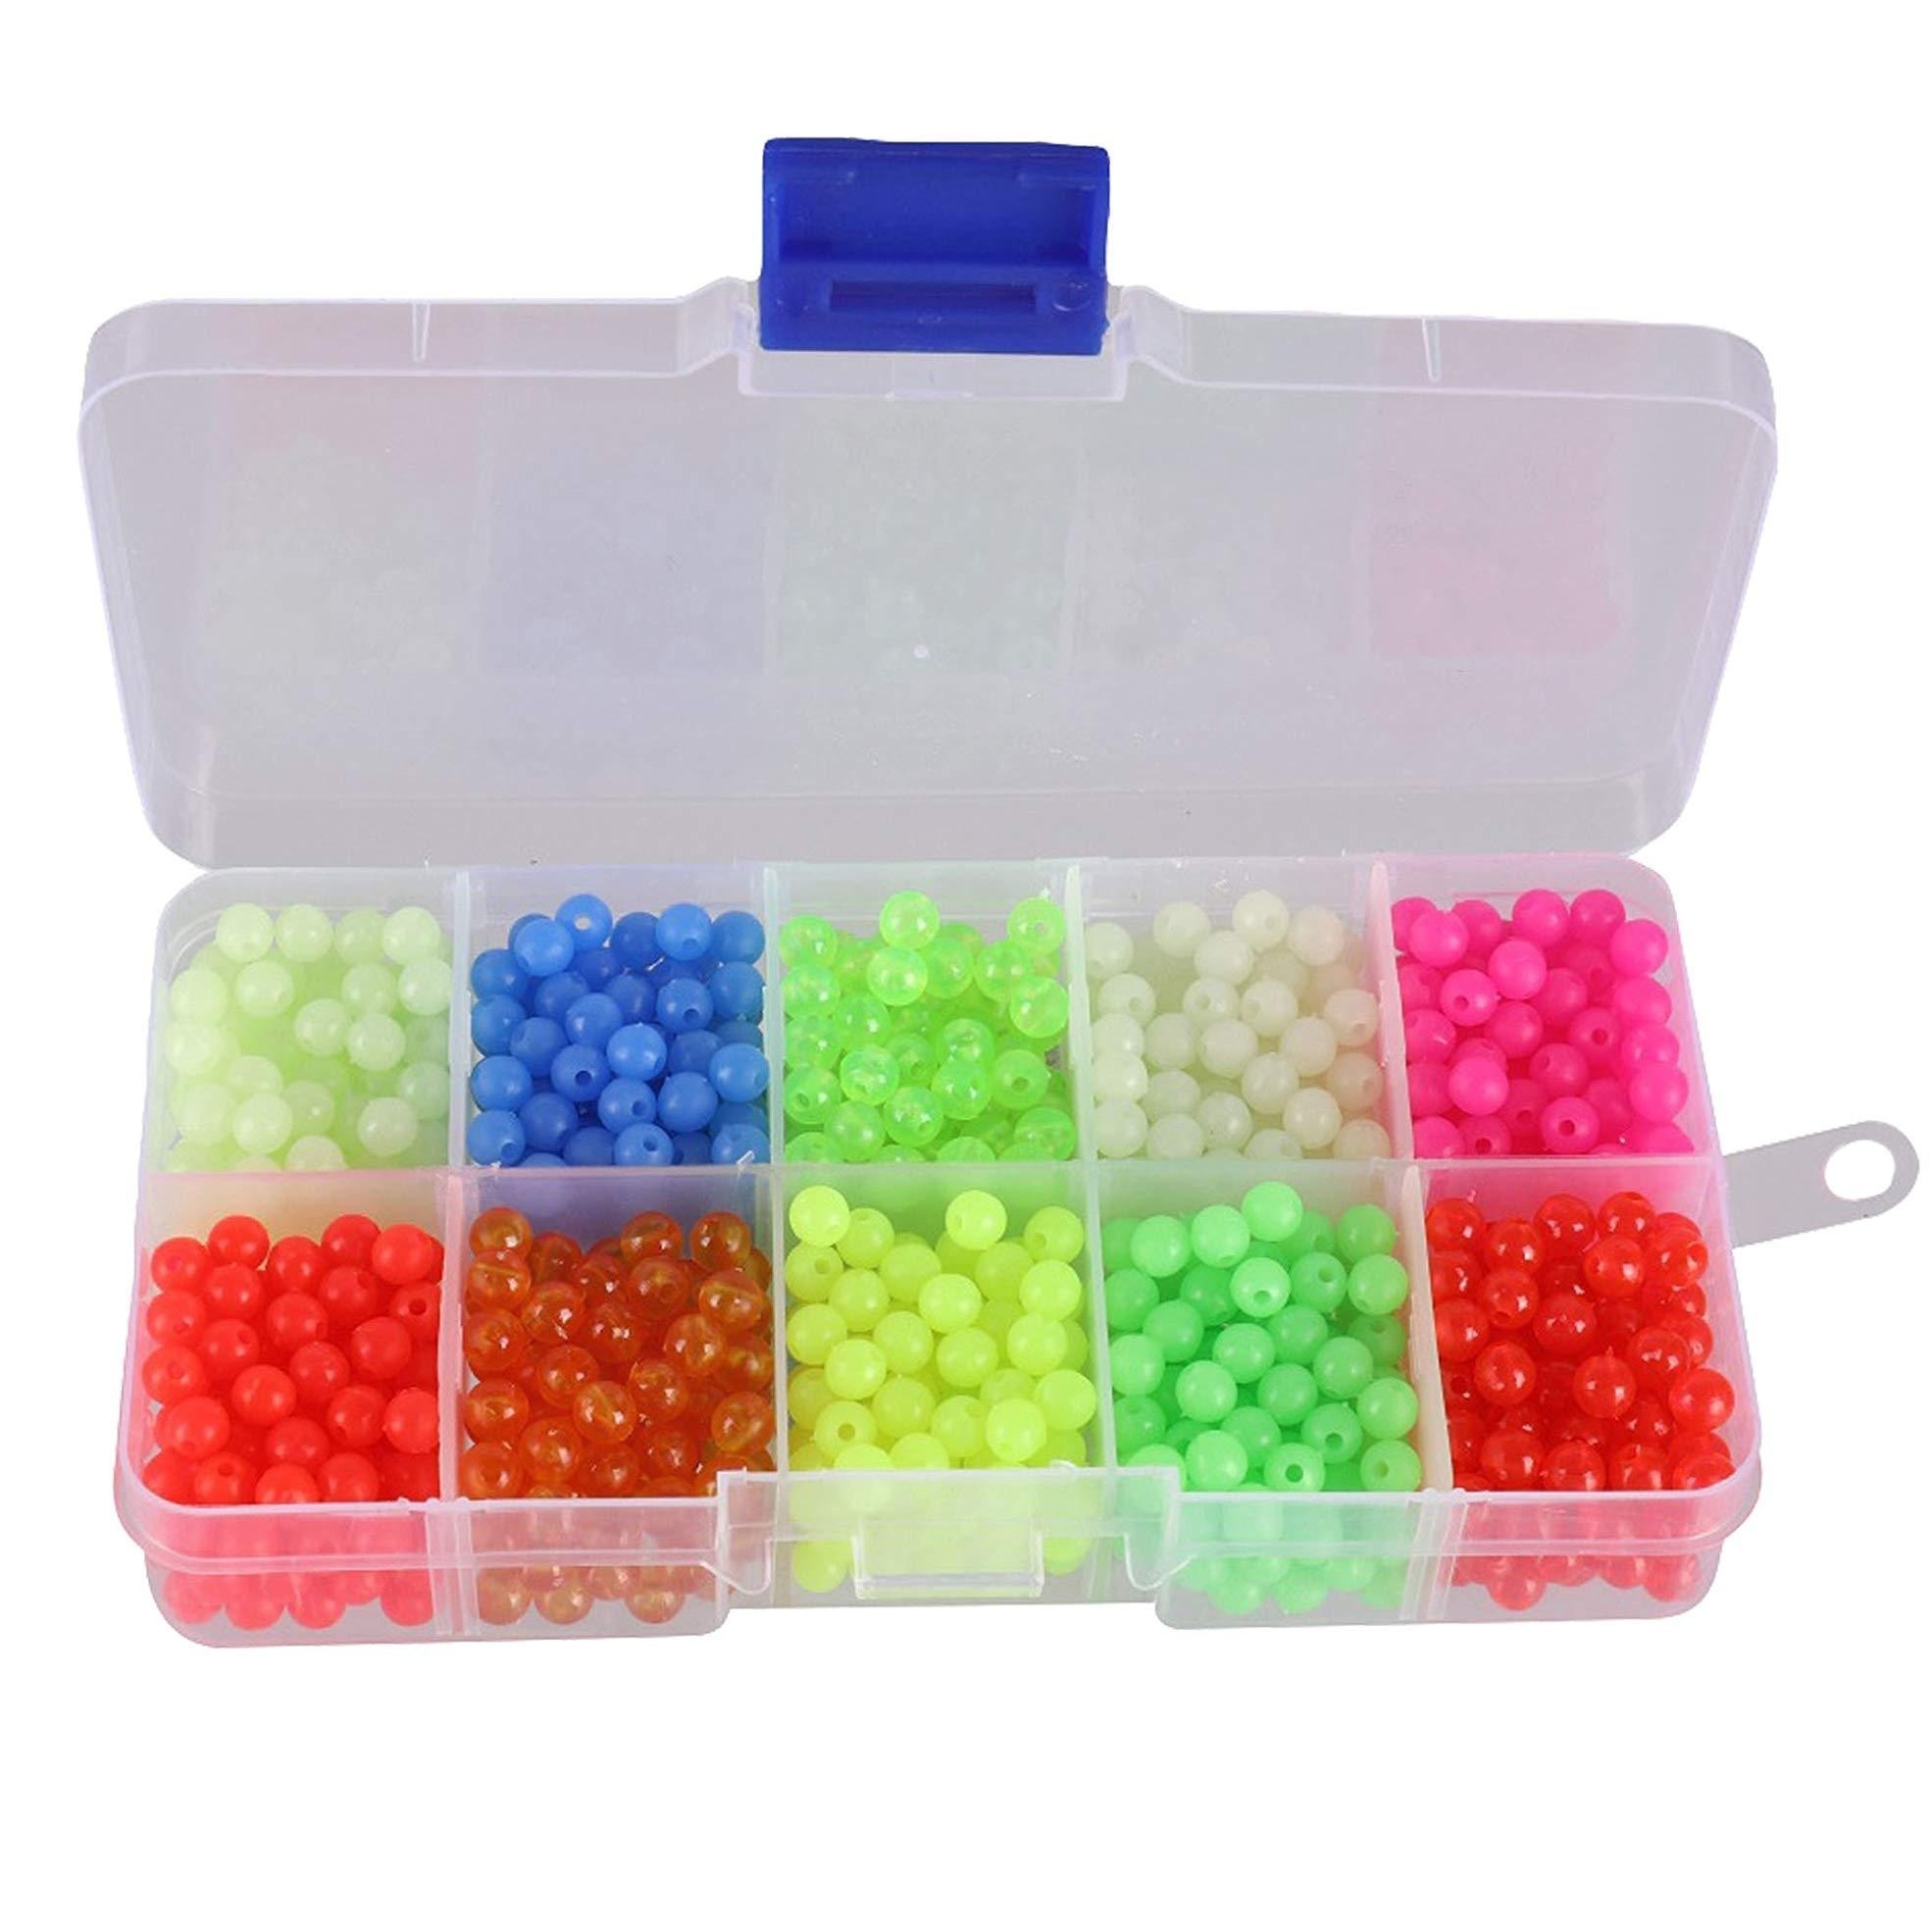 Glow Fishbowl Beads - 7 Colors!